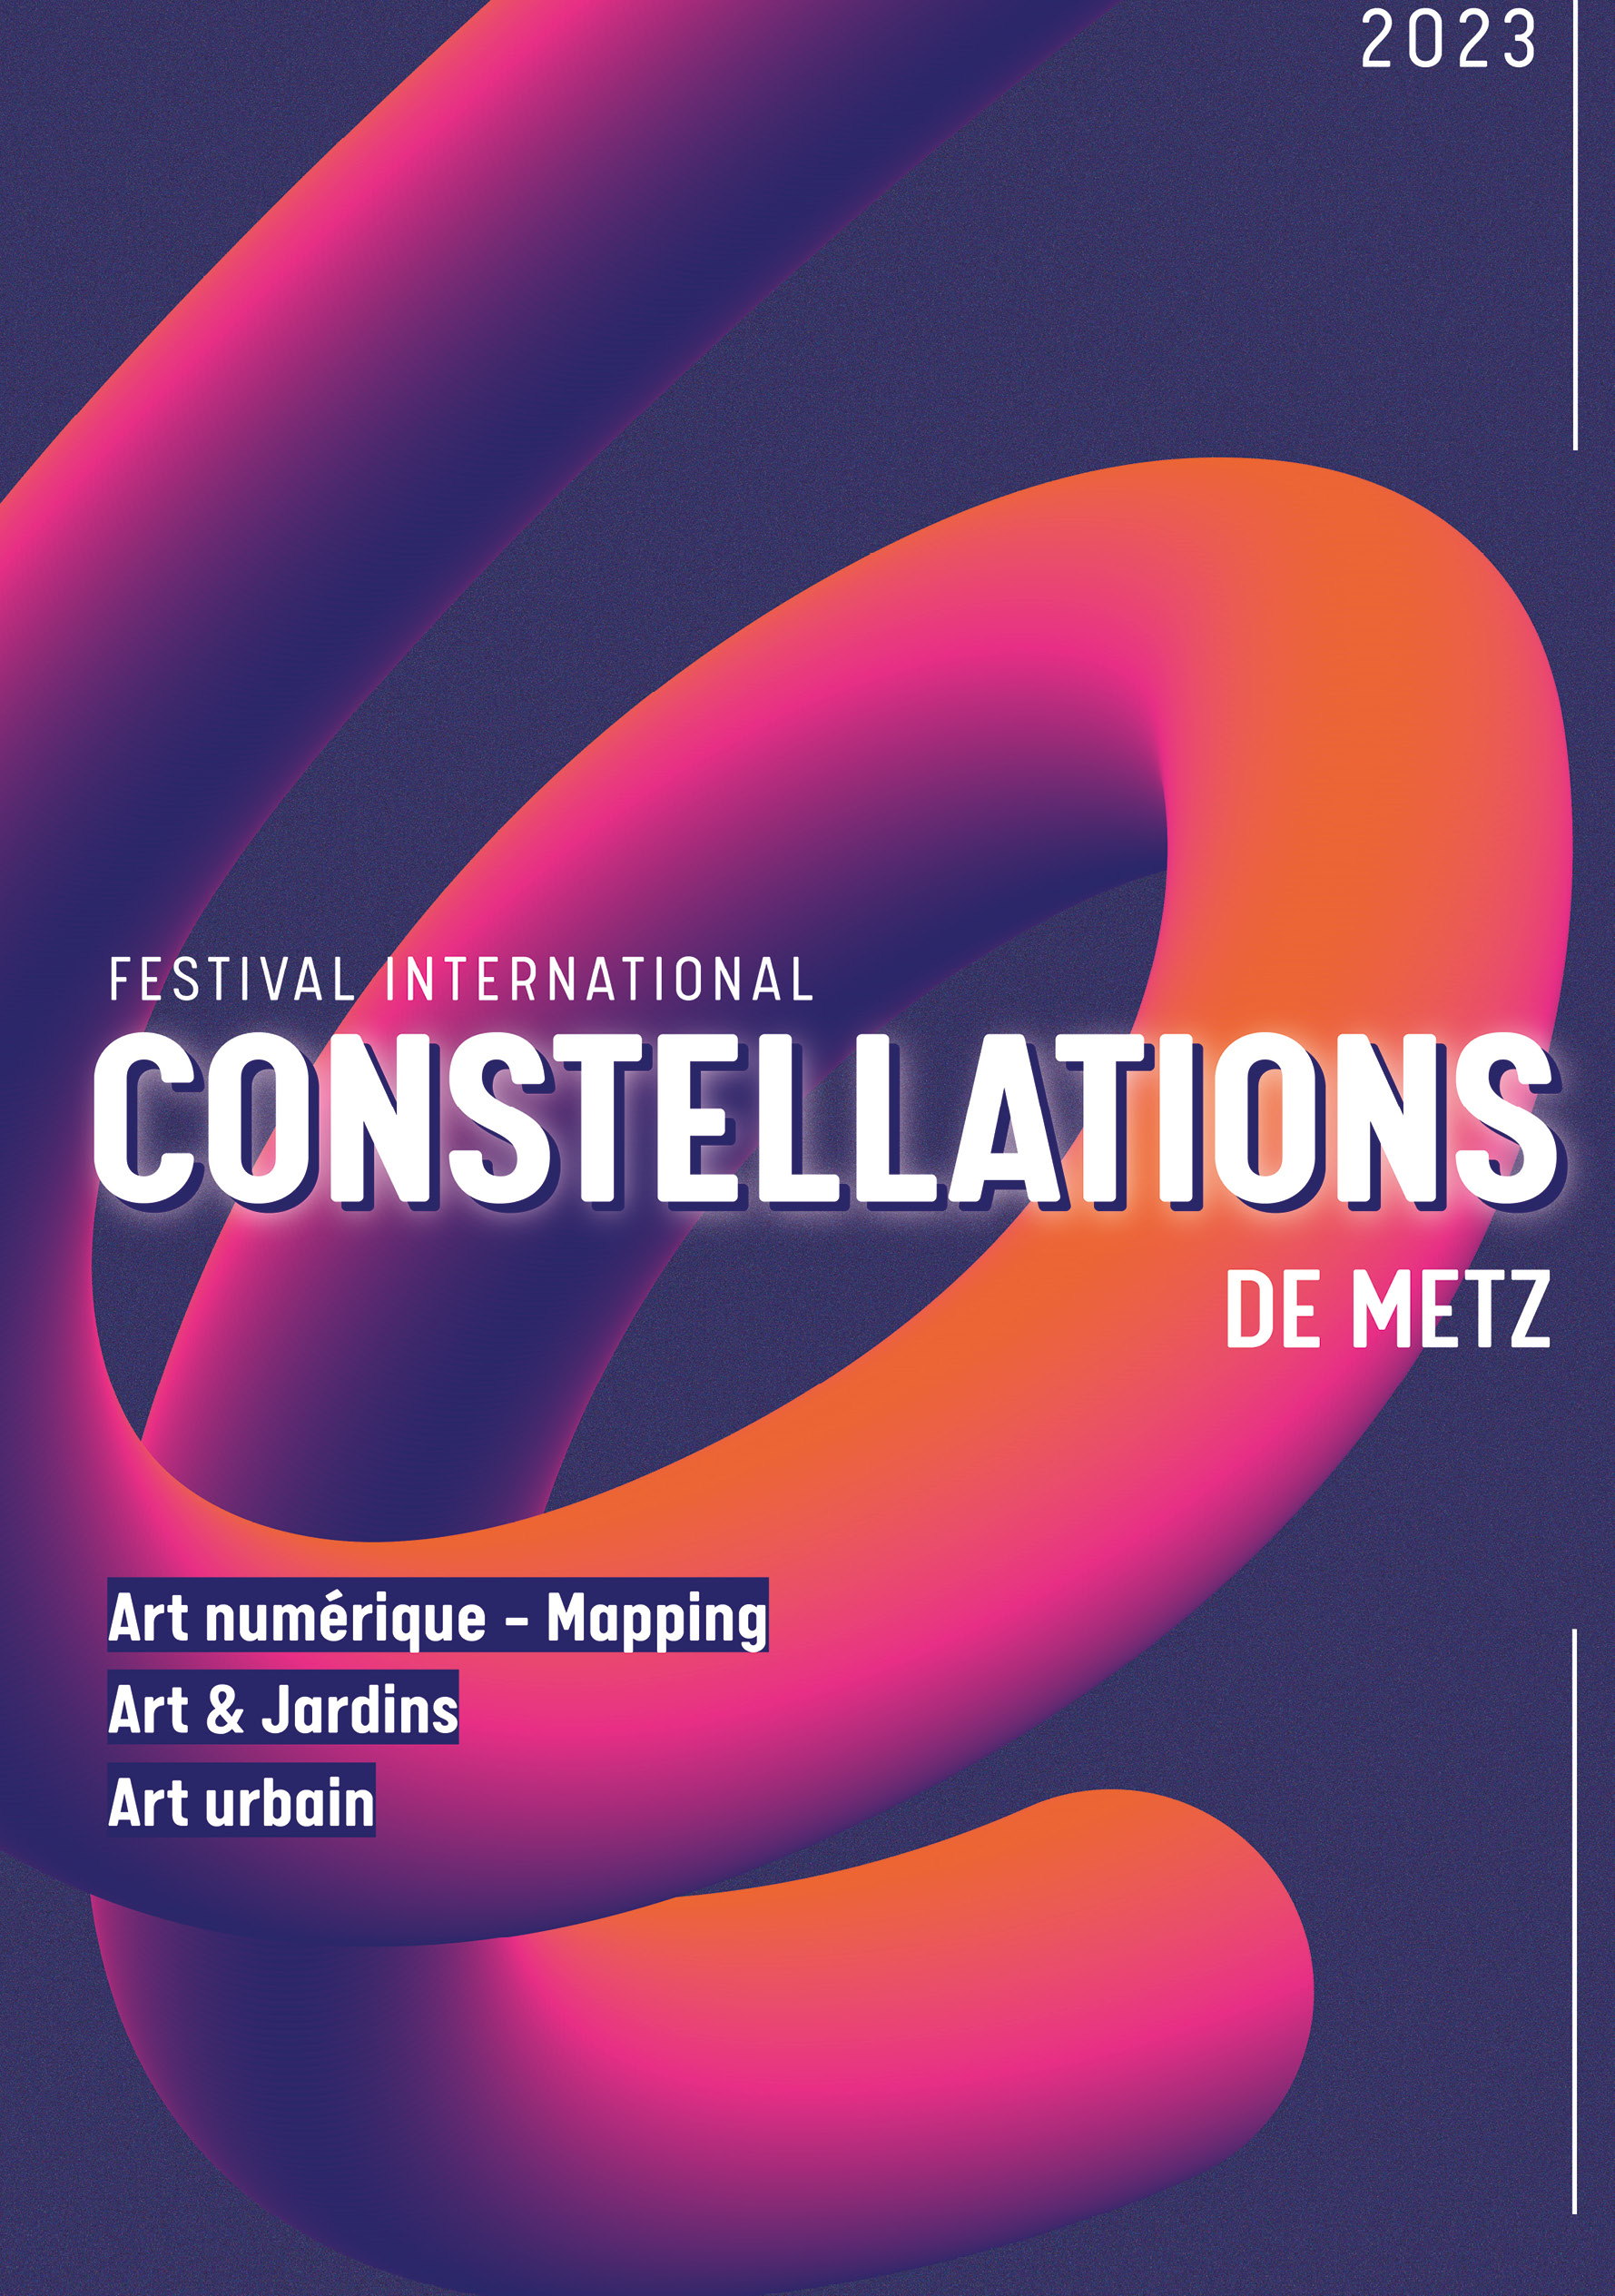 Festival international Constellations de Metz 2023